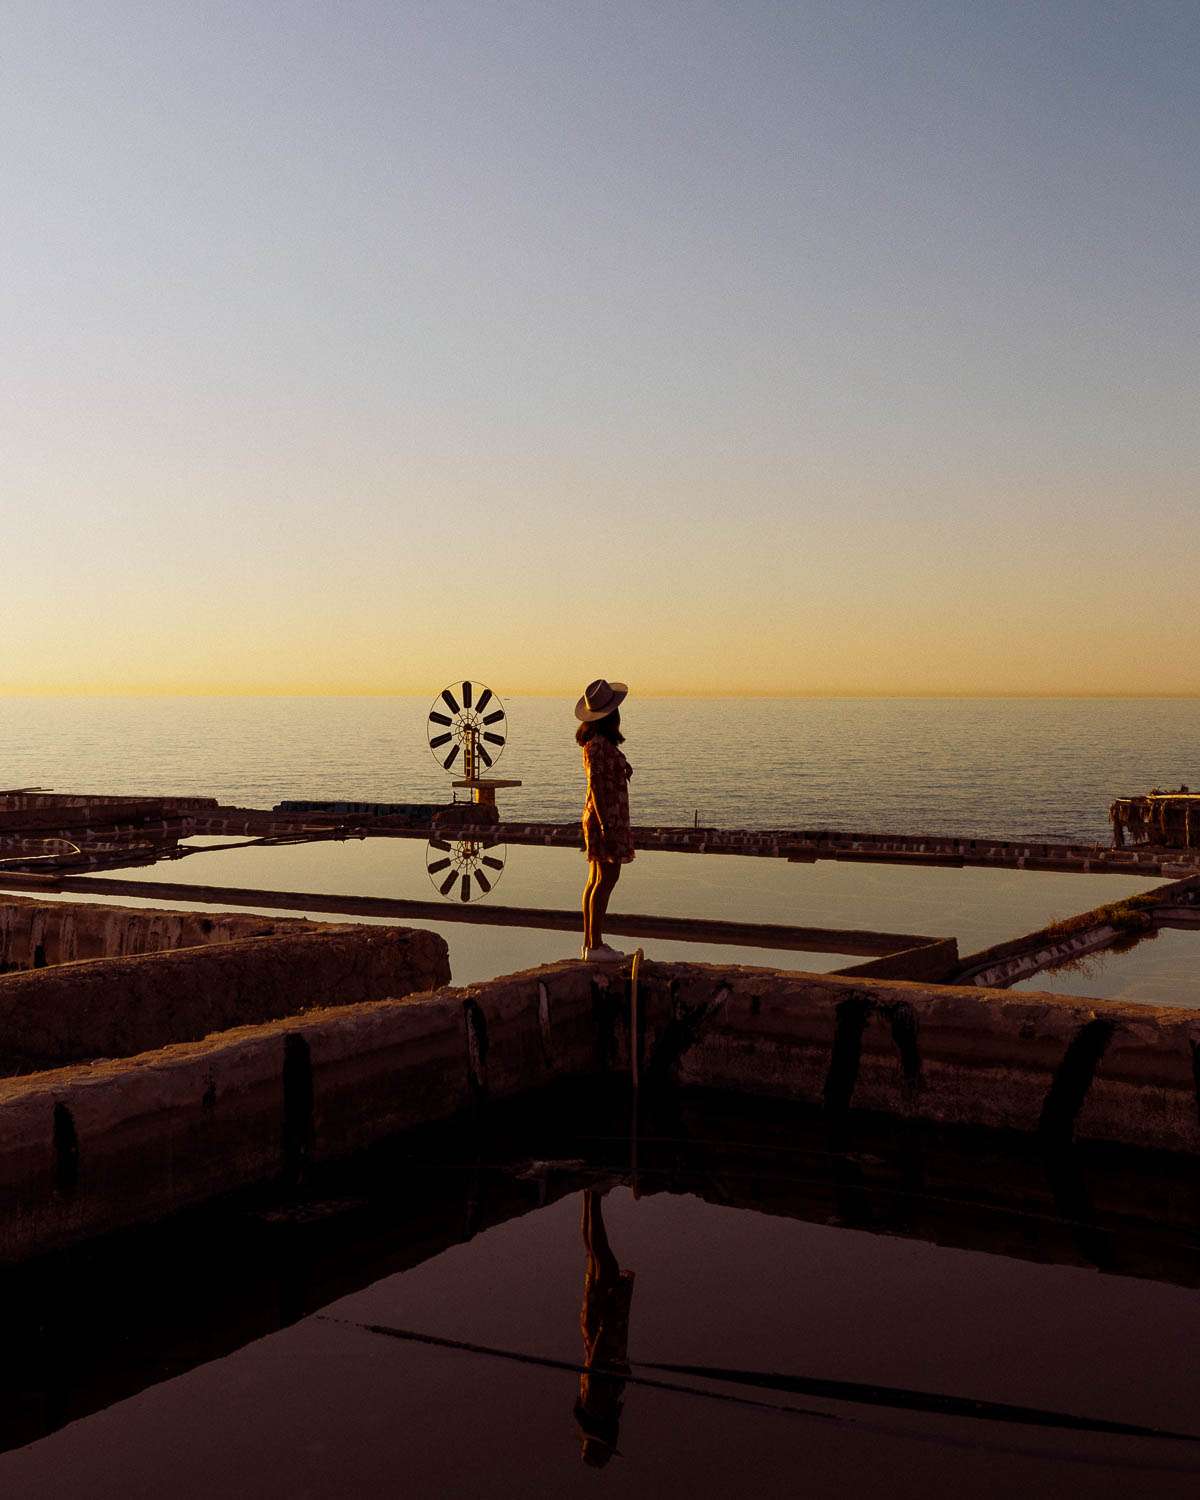 Rachel Off Duty: A Woman Standing on the Old Salt Flats in Lebanon